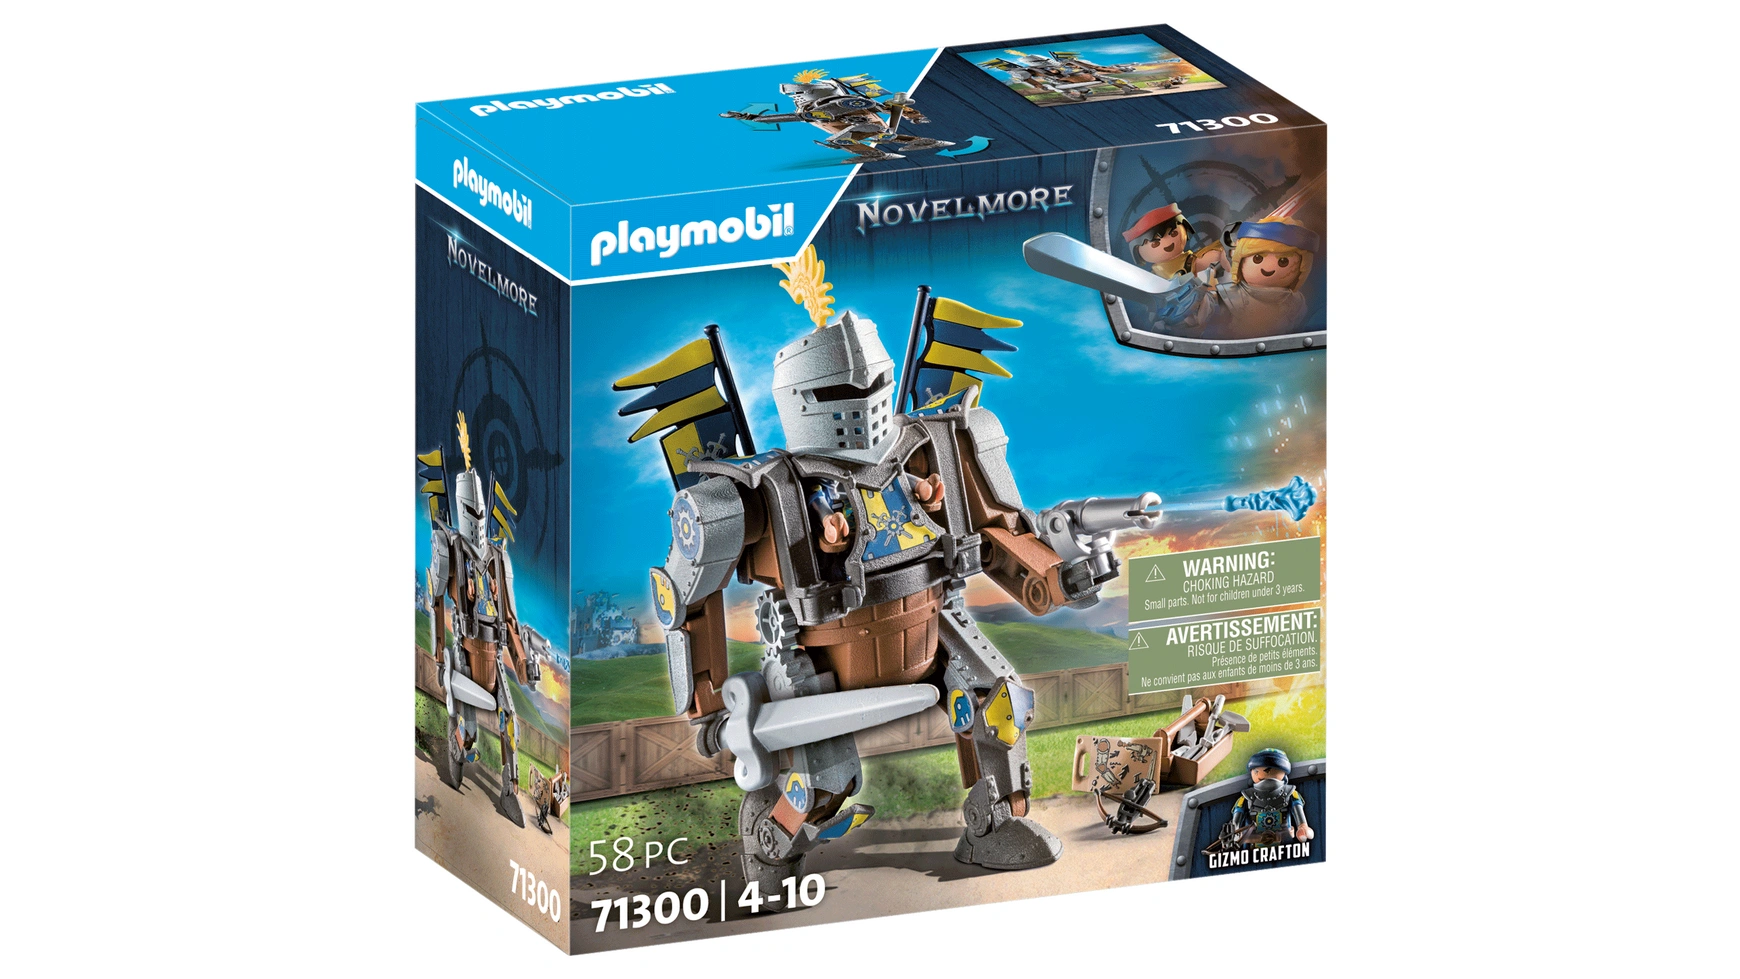 Novelmore боевой робот Playmobil novelmore мои фигурки рыцари новелмора playmobil